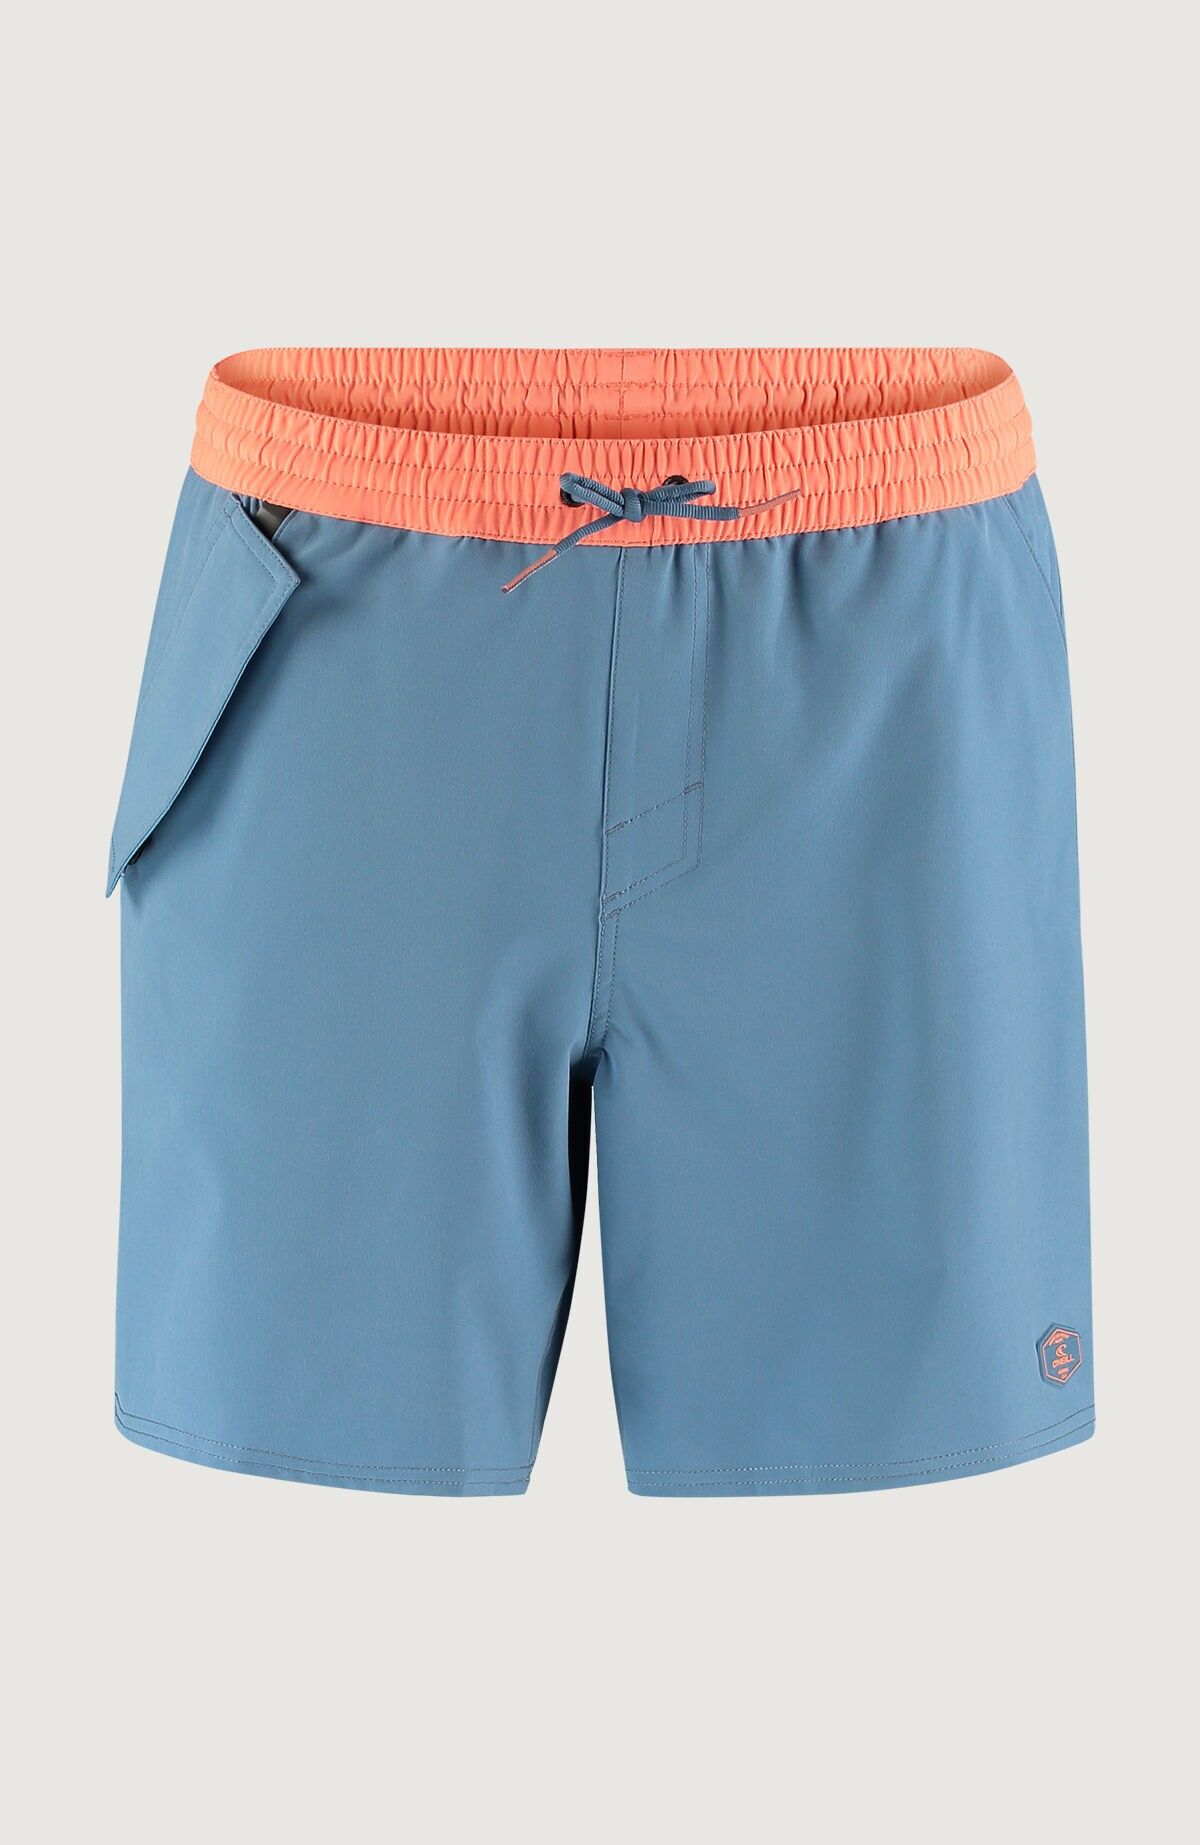 O'Neill Wp-Pocket Shorts - Boardshort Herrer